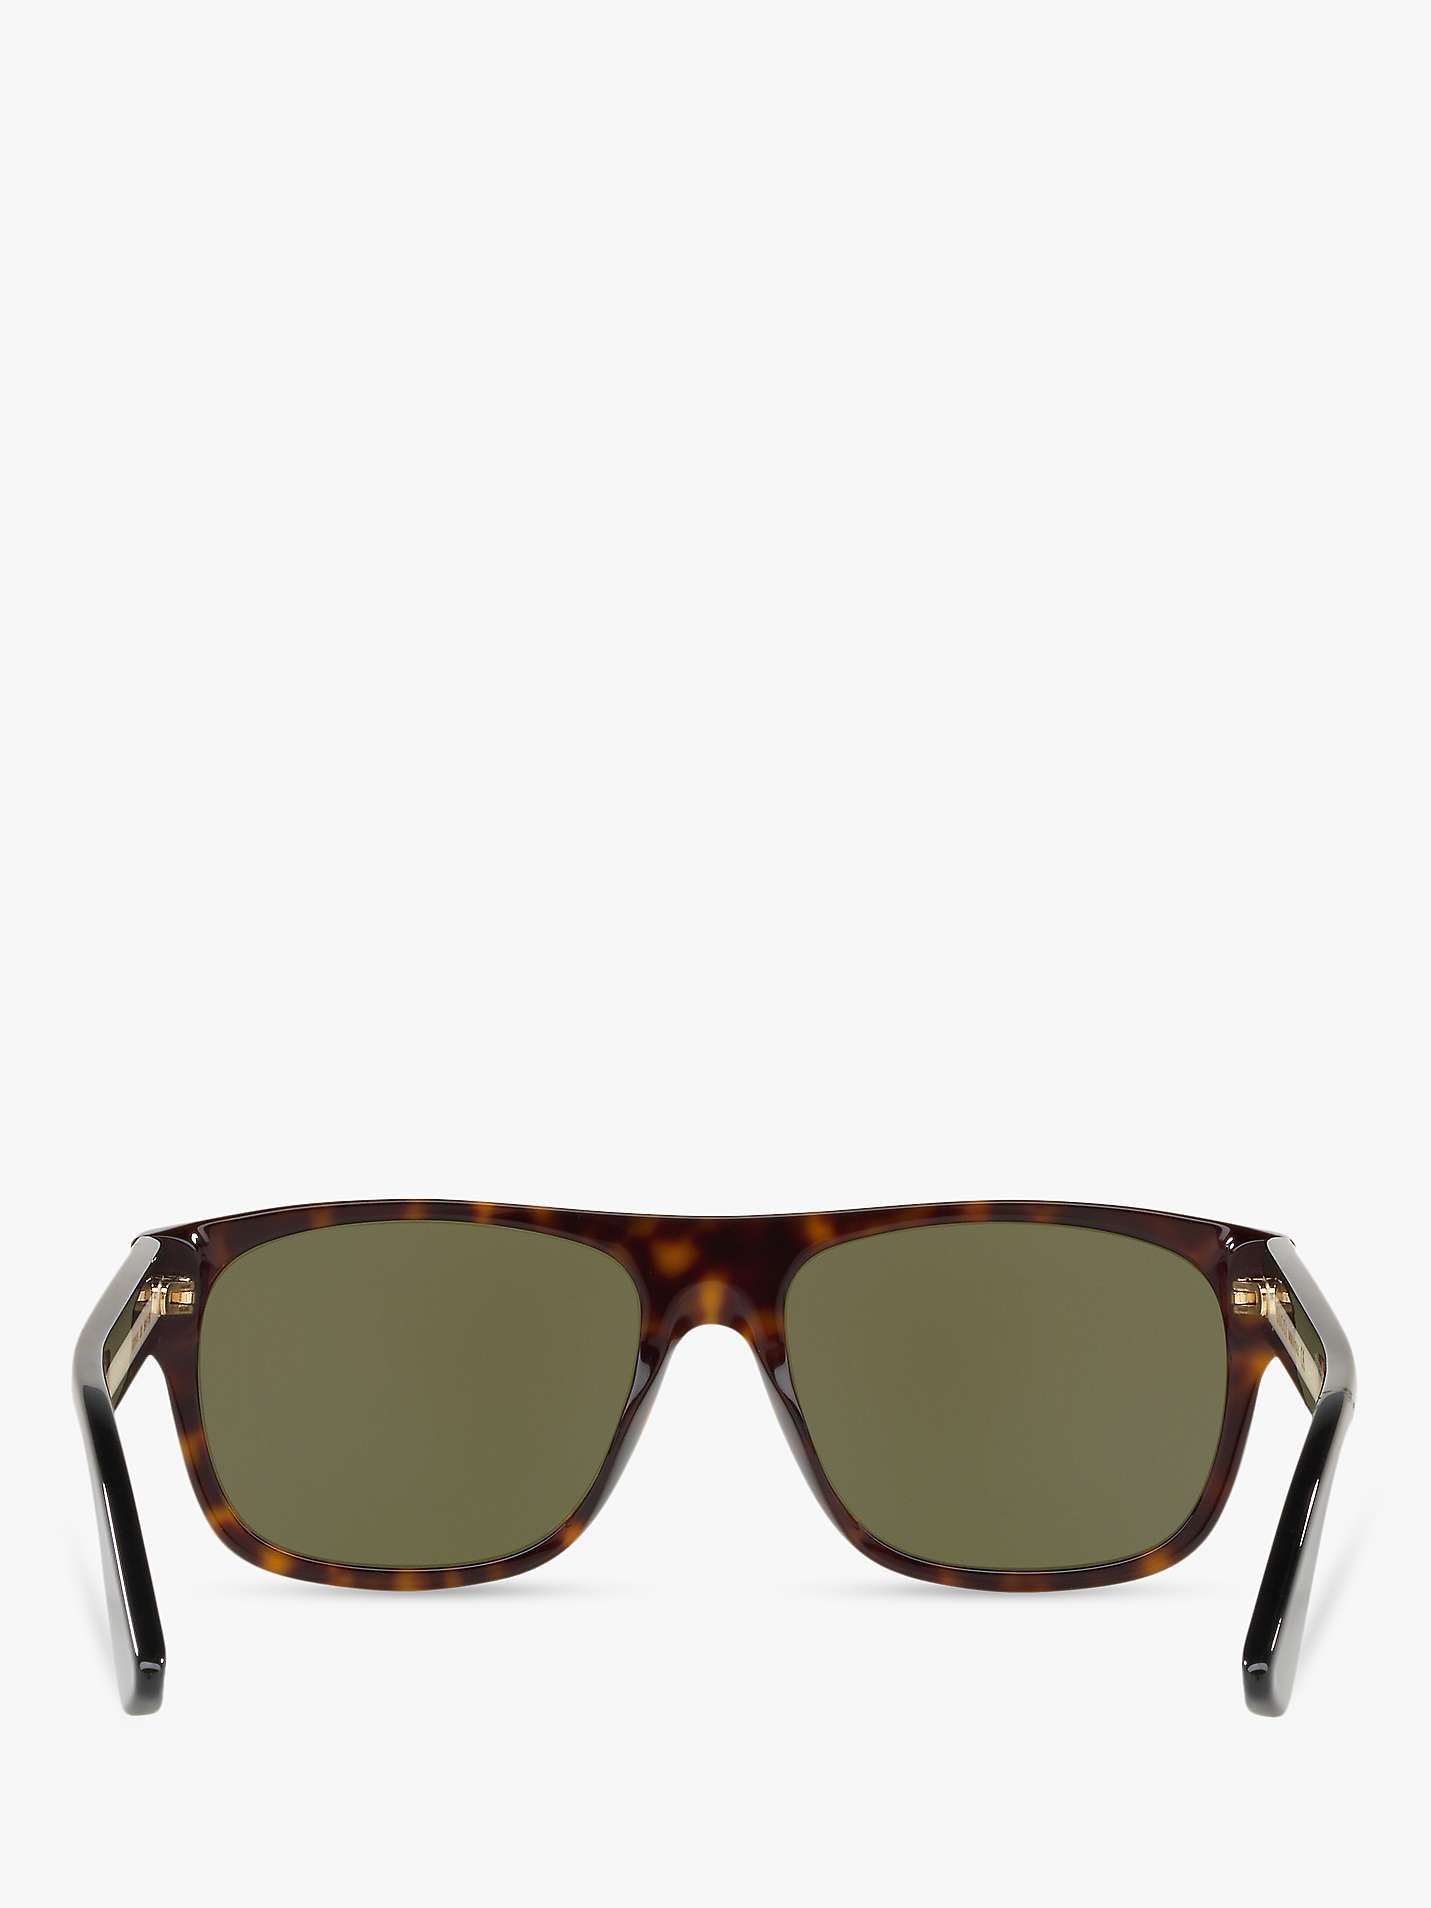 Buy Gucci GG0341S Men's Rectangular Sunglasses Online at johnlewis.com